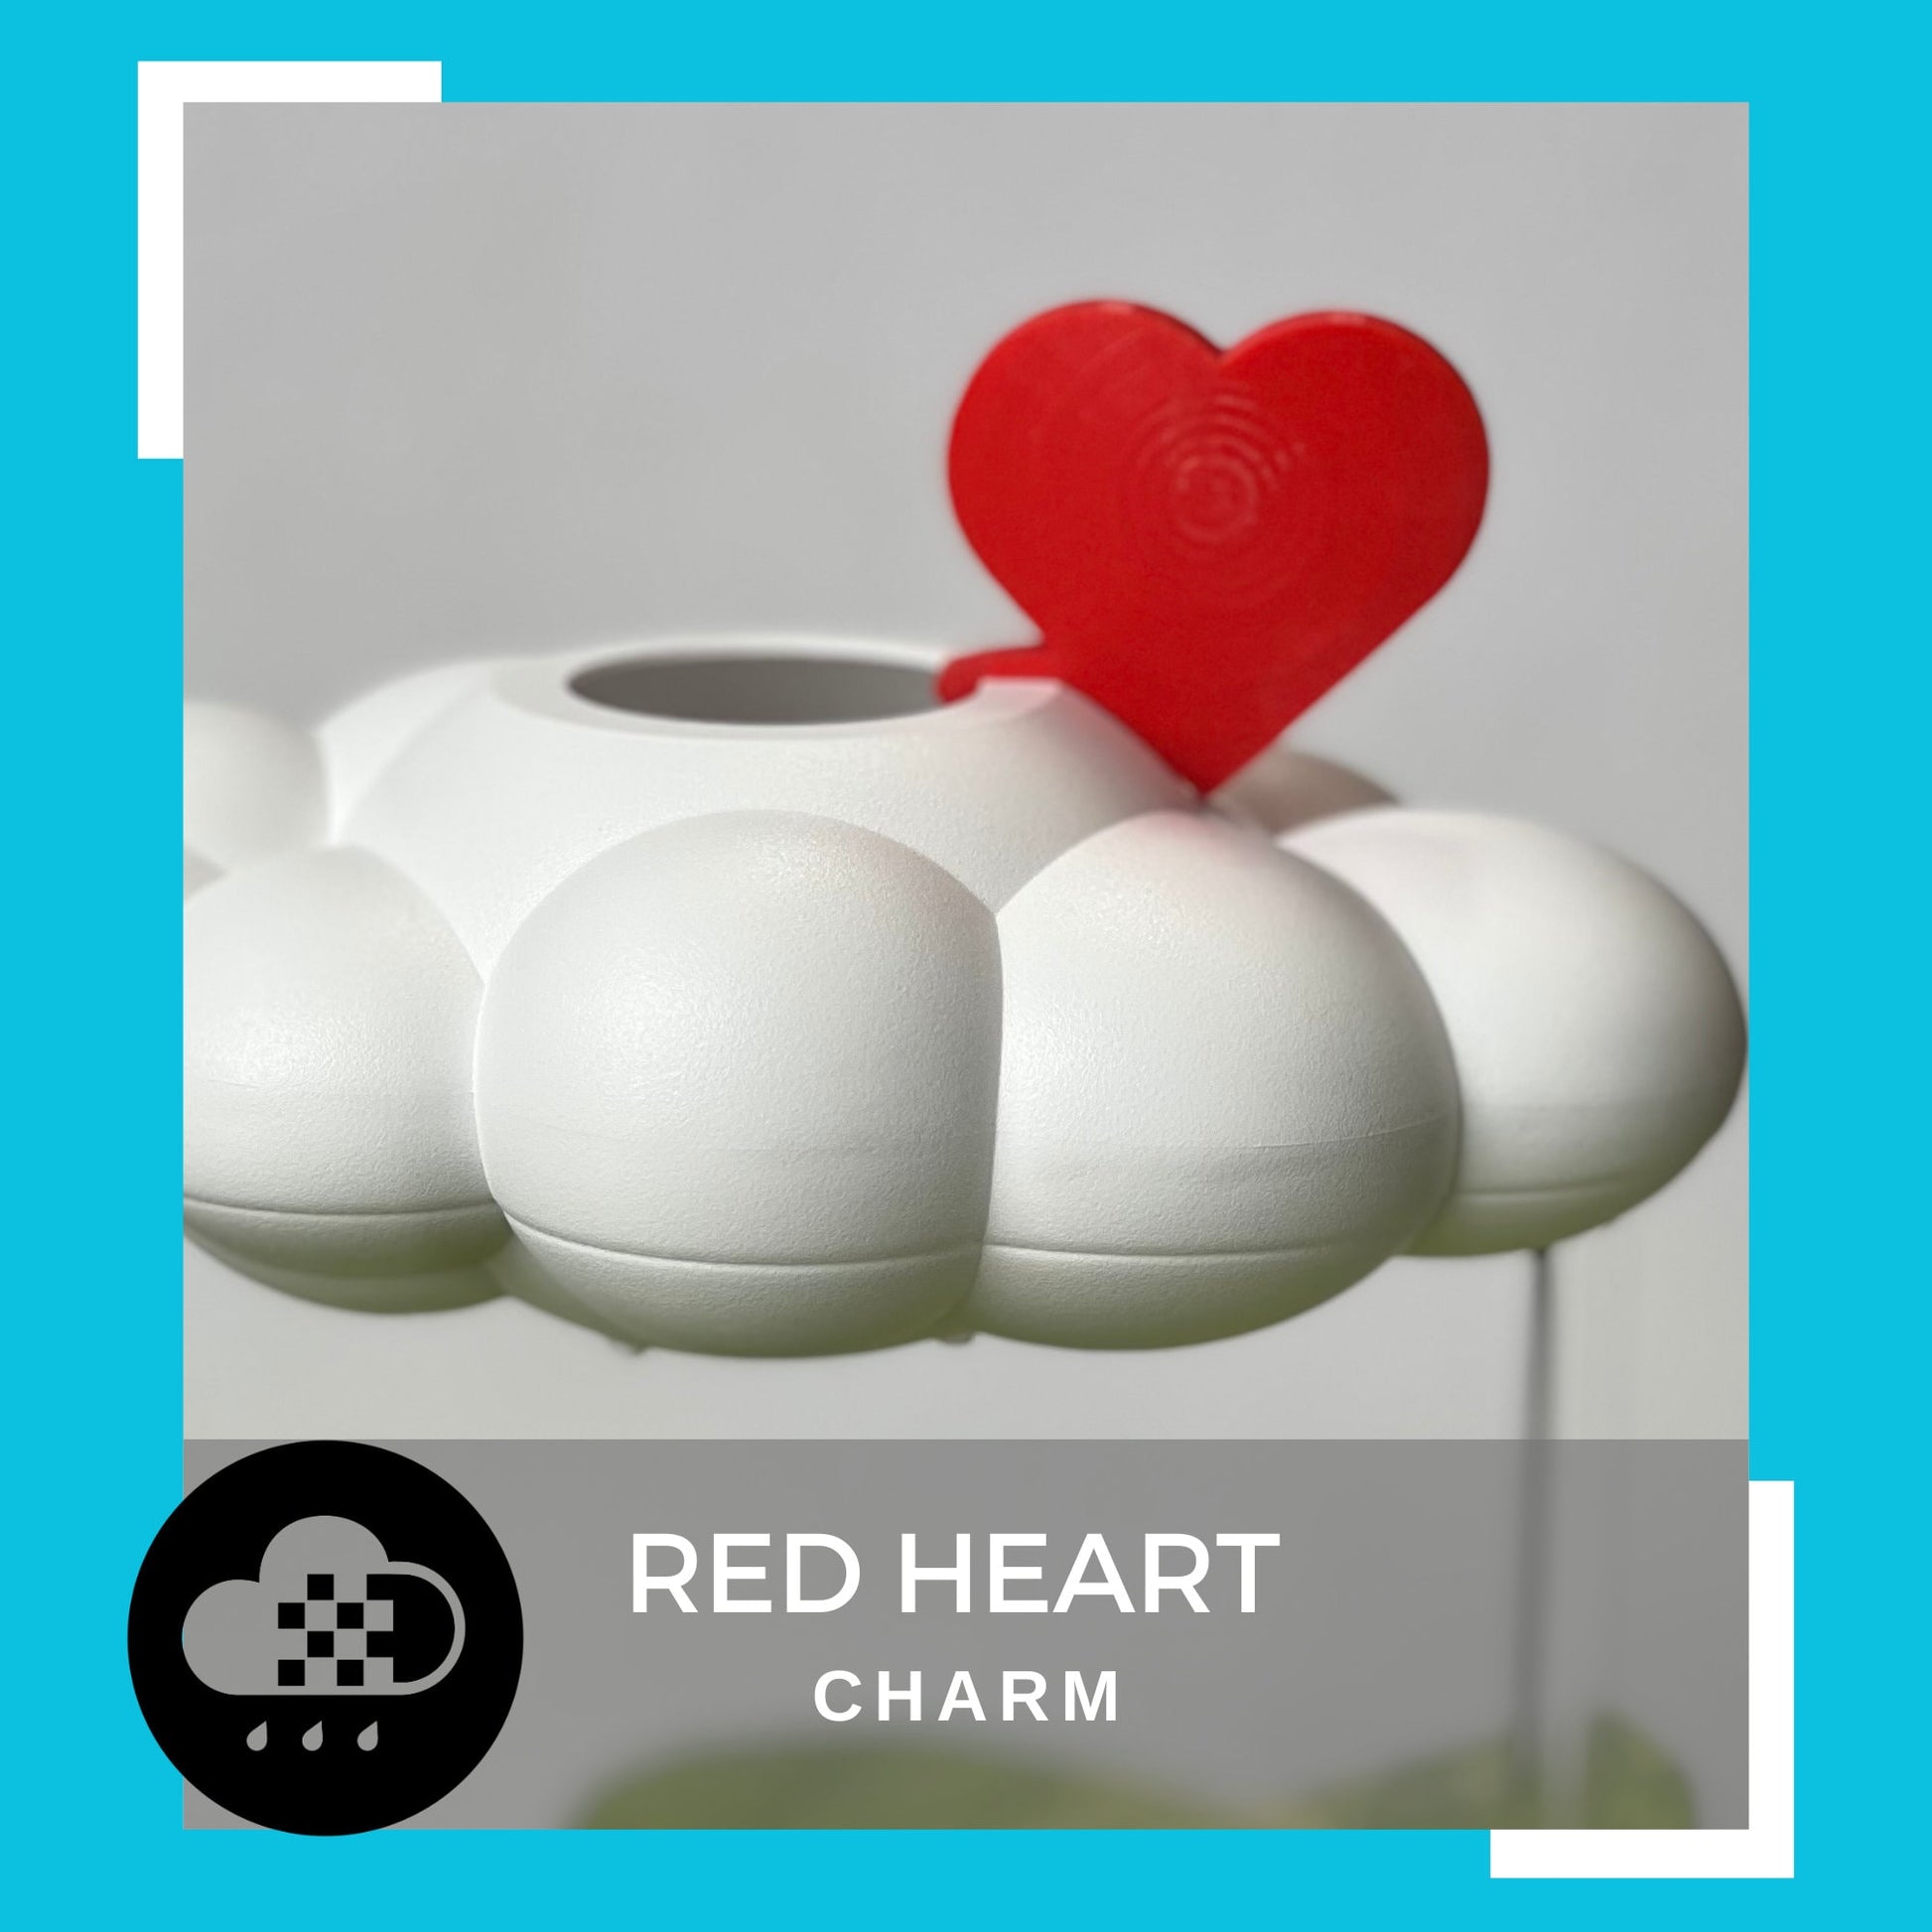 Red Heart charm for dripping rain cloud